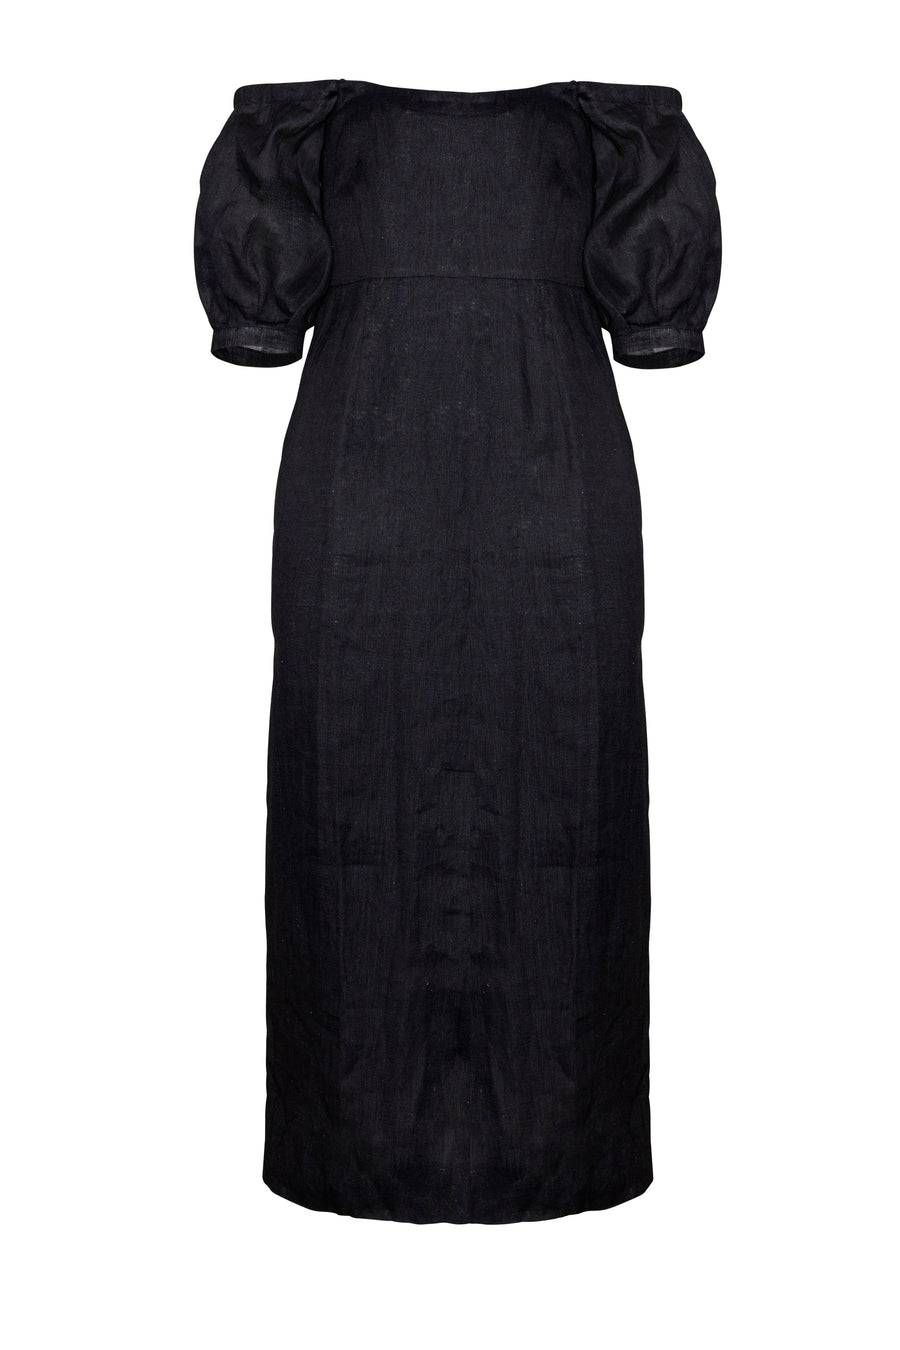 Eliza Dress Black Linen